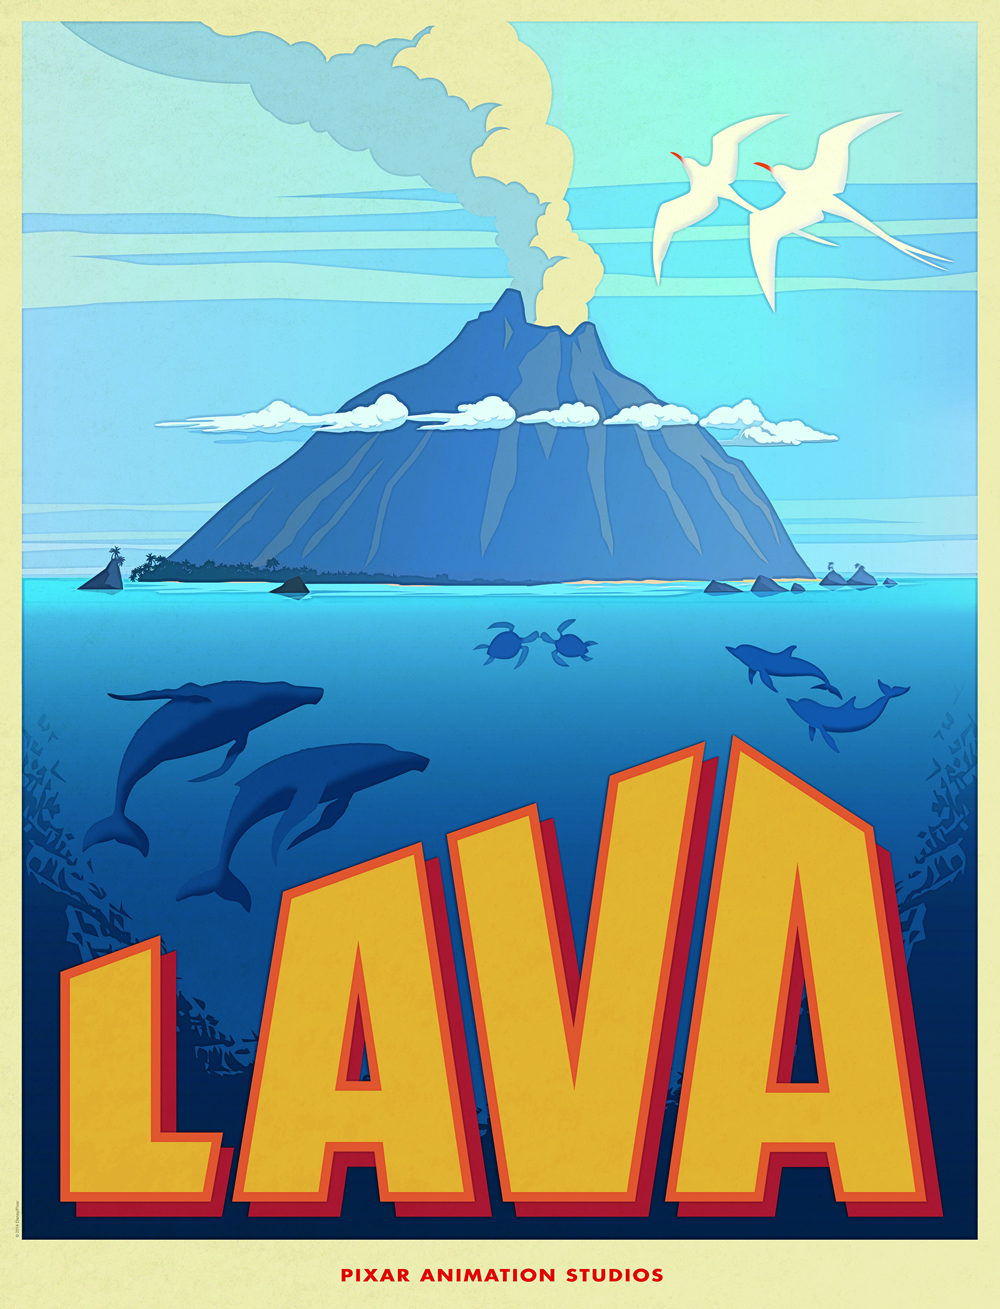 Pixar Announces ‘Lava’